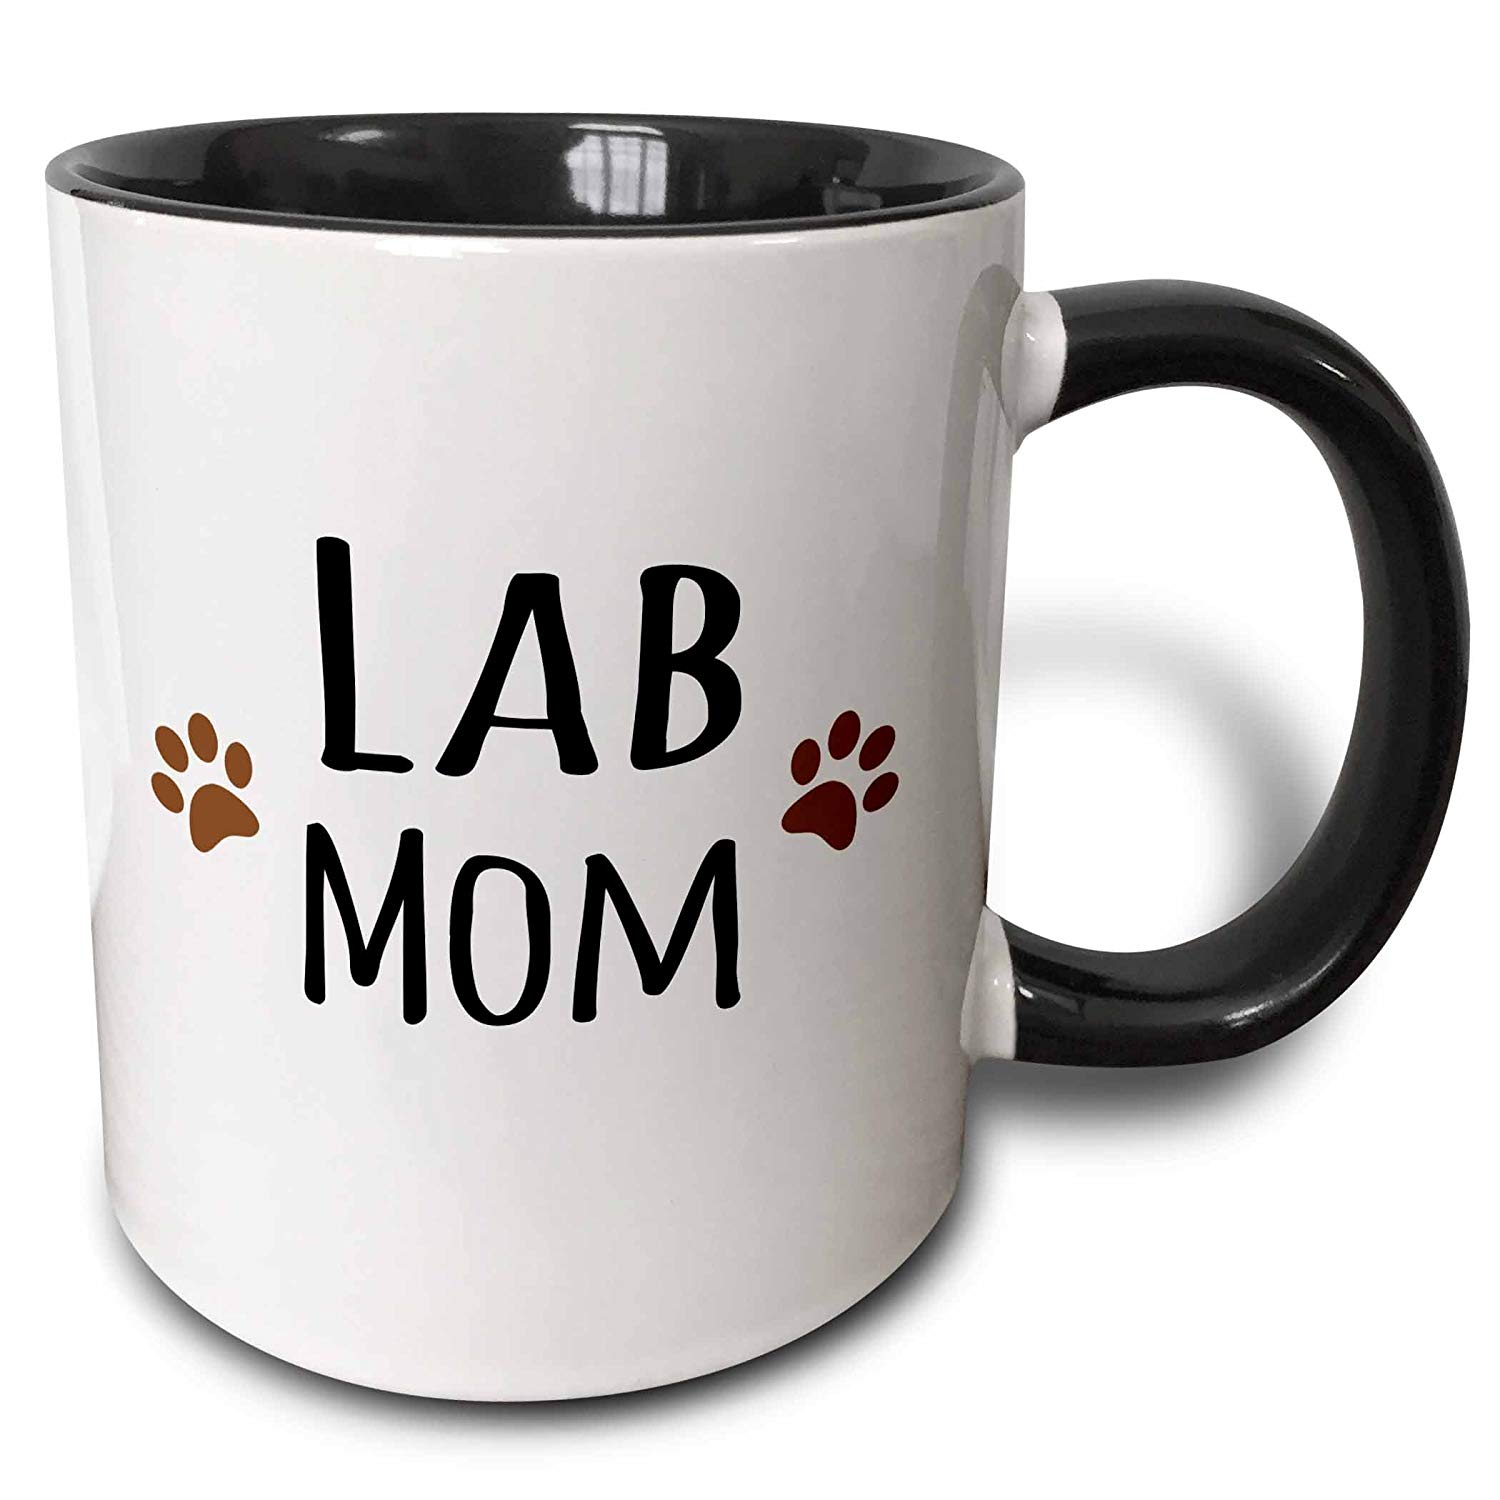 A coffee mug with paw prints and - Lab Mom